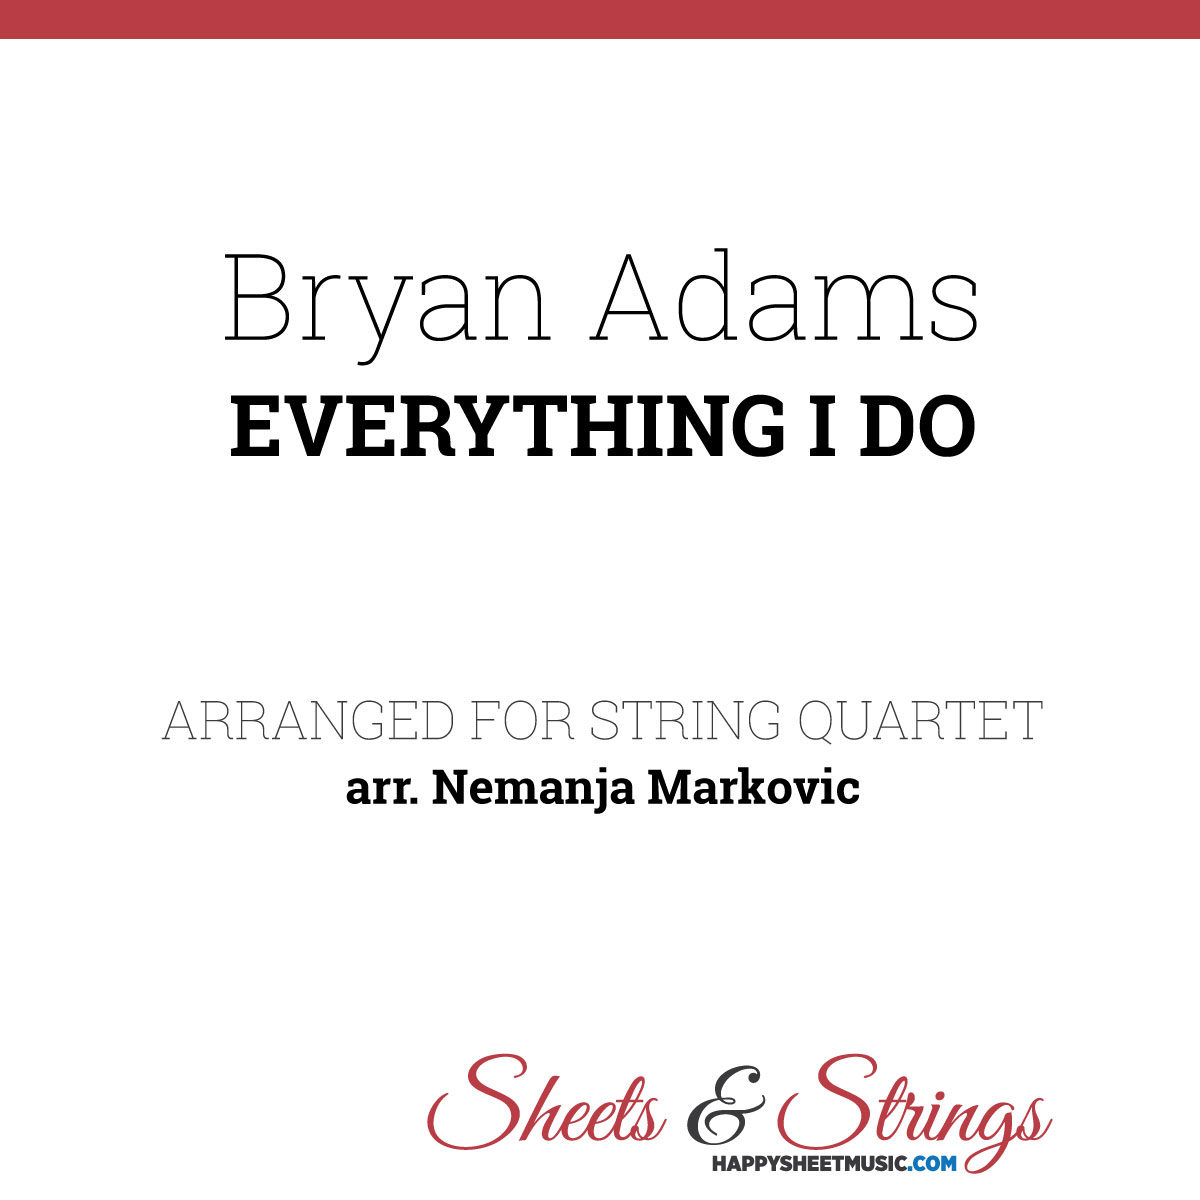 Bryan Adams - Everything I Do Sheet Music for String Quartet - Music Arrangements for String Quartet